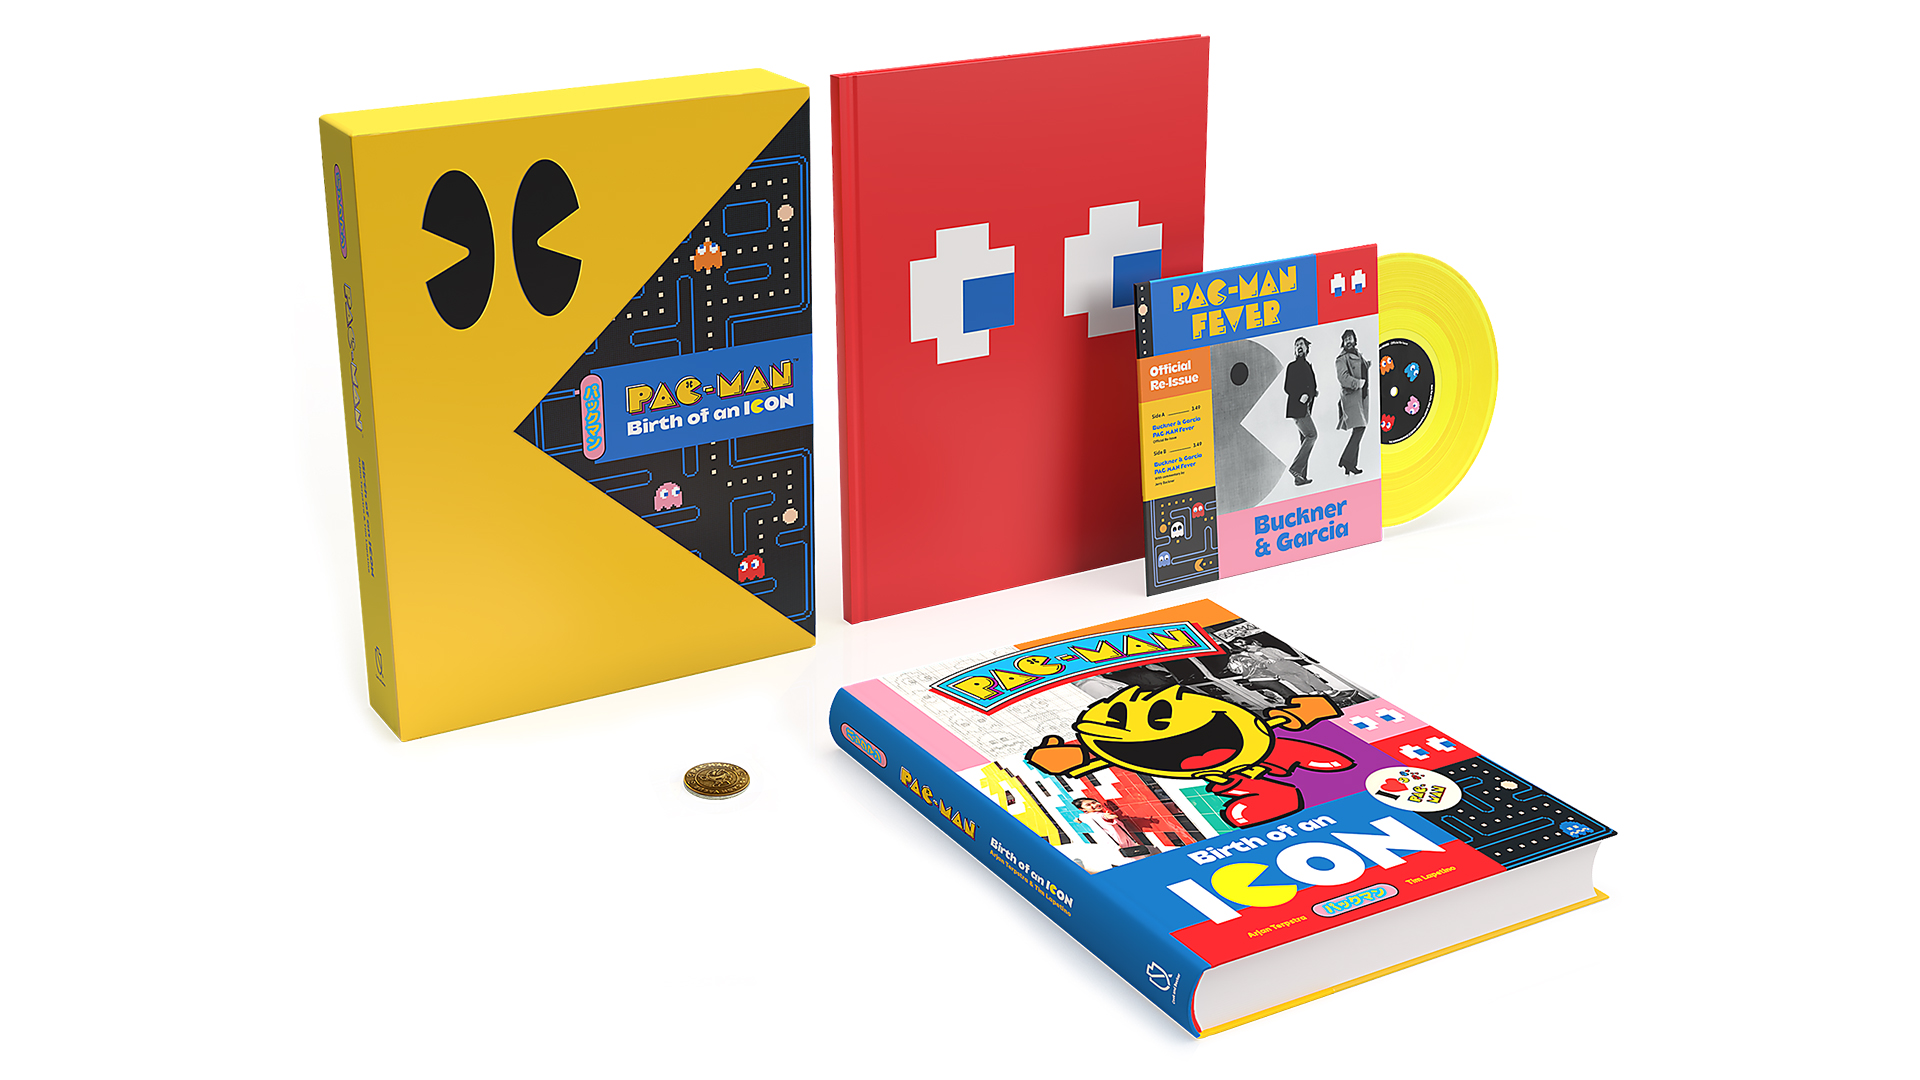 Angeschaut – Pac-Man: Birth of an Icon